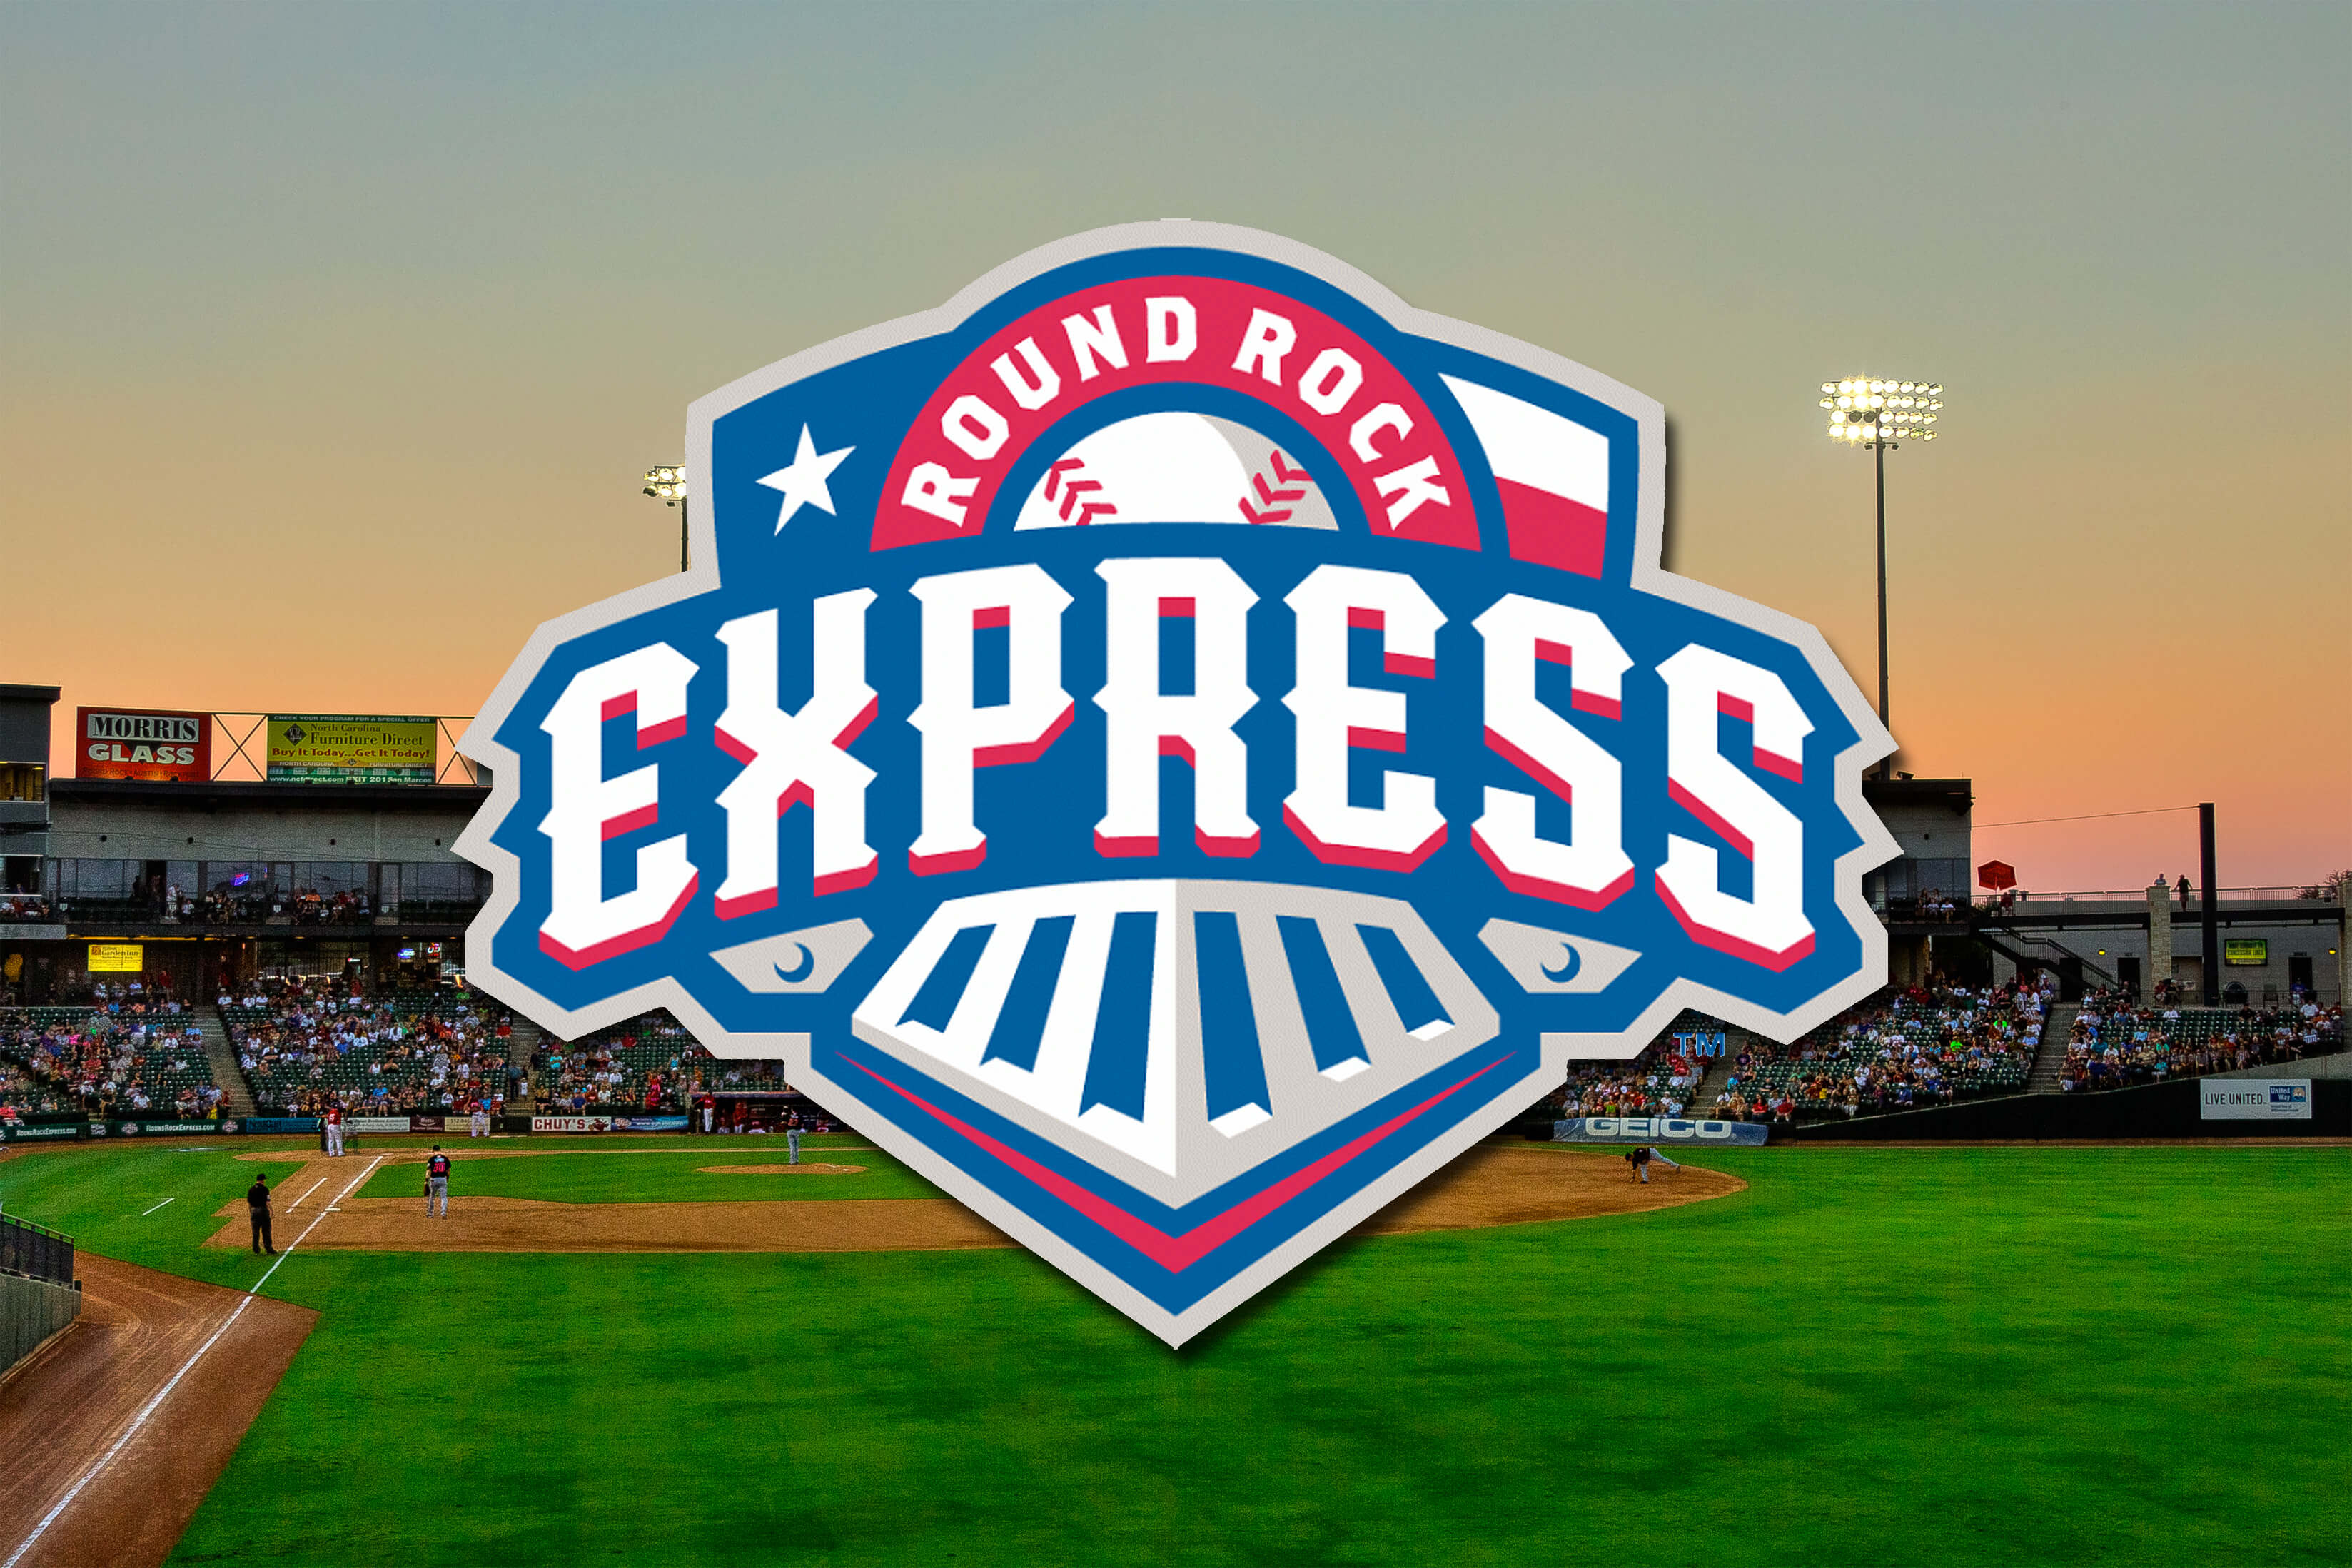 Round Rock Express Stadium